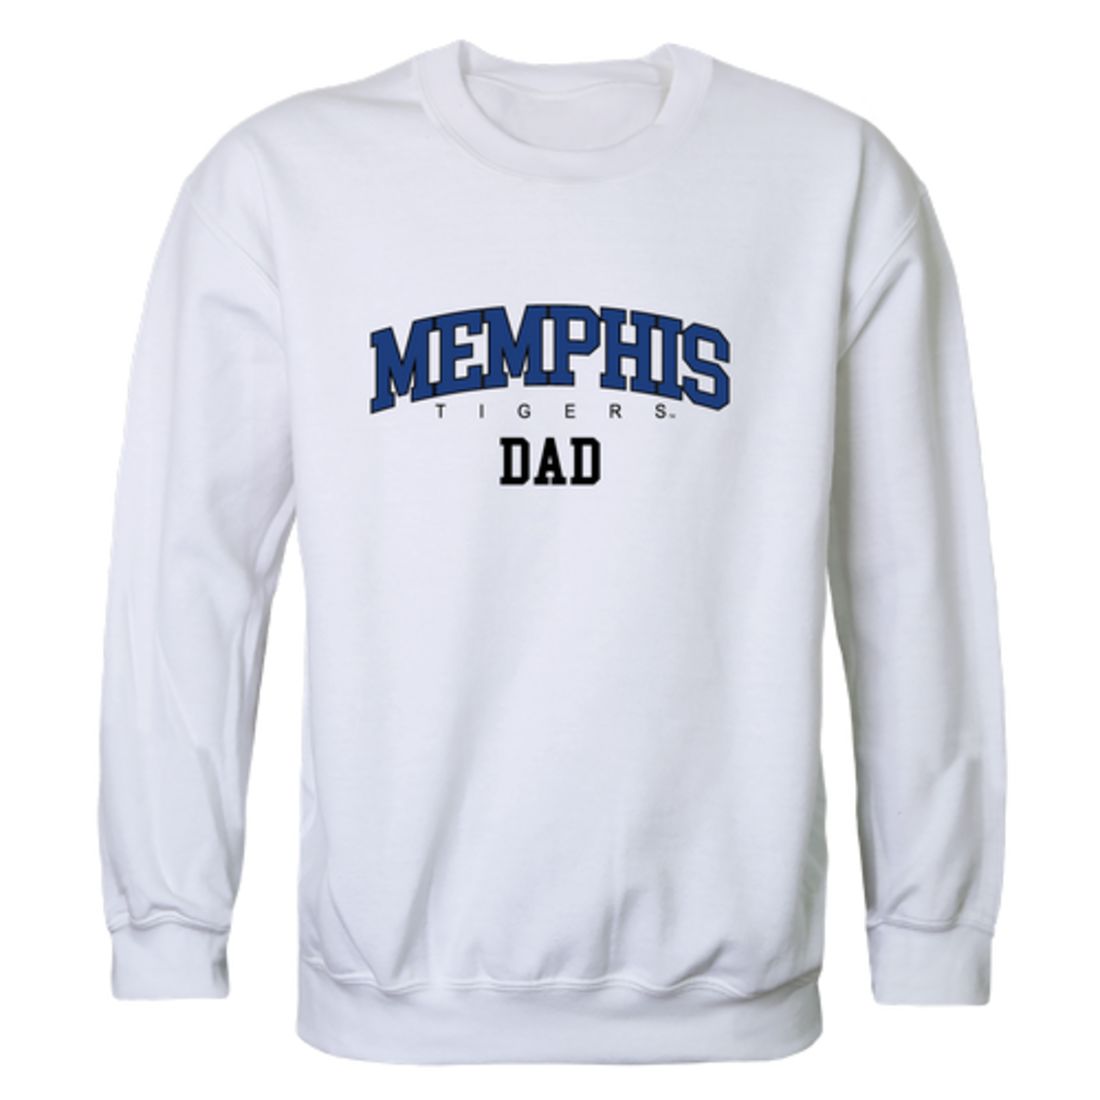 Menphis Tigers Dad Fleece Crewneck Pullover Sweatshirt